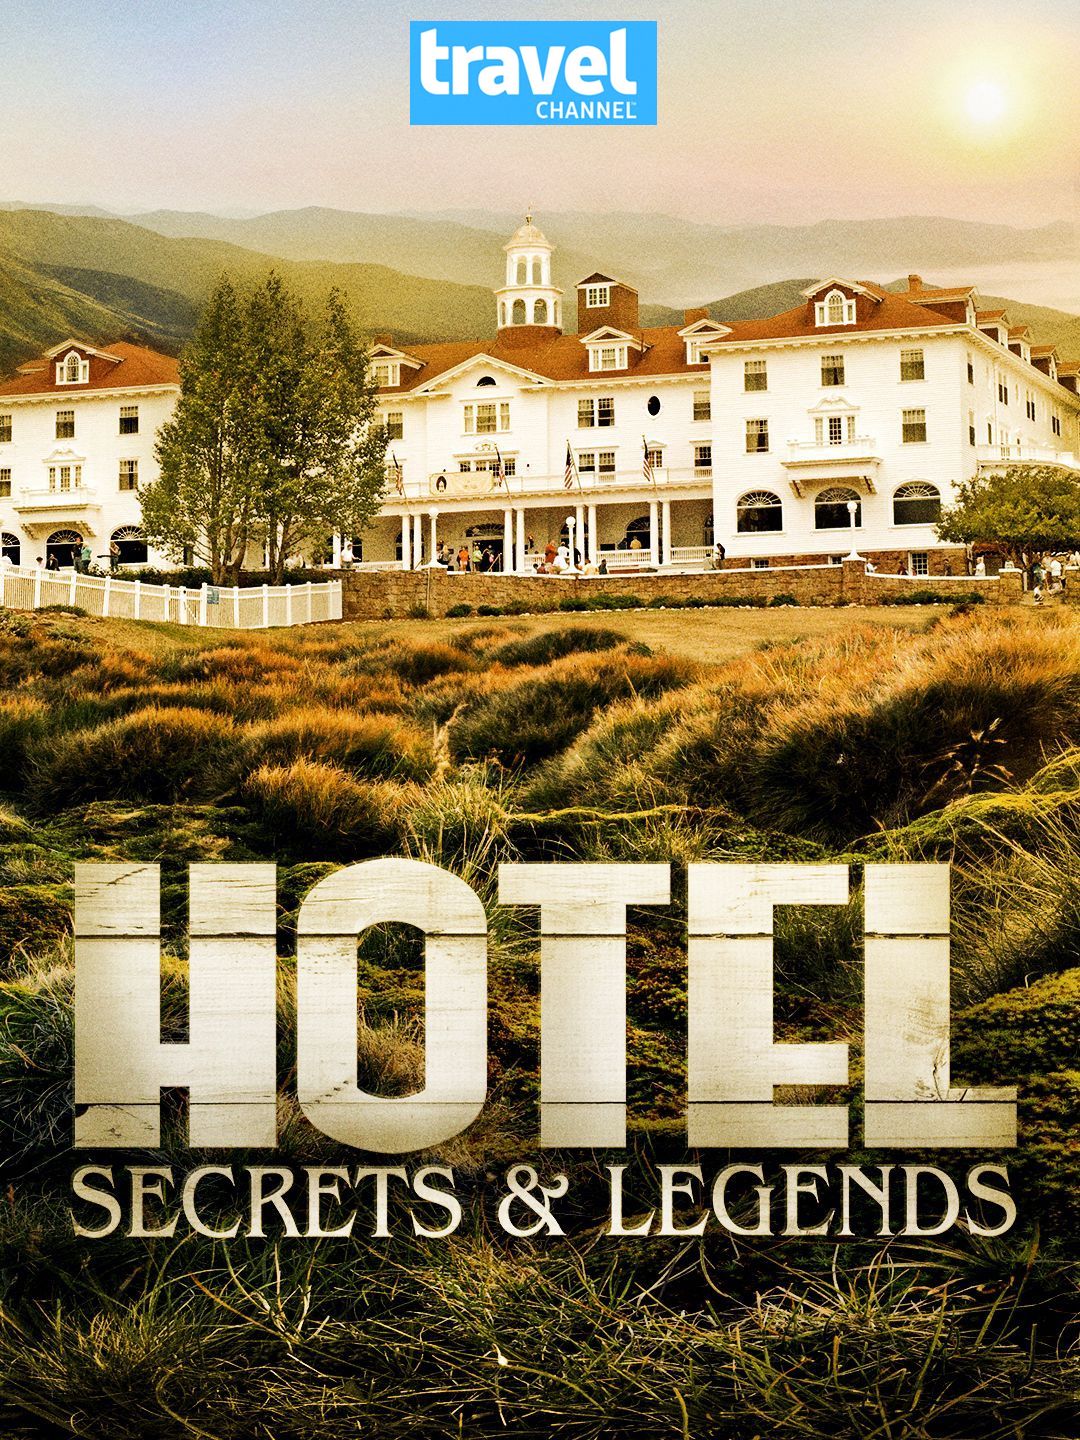 Hotel Secrets and Legends.jpg